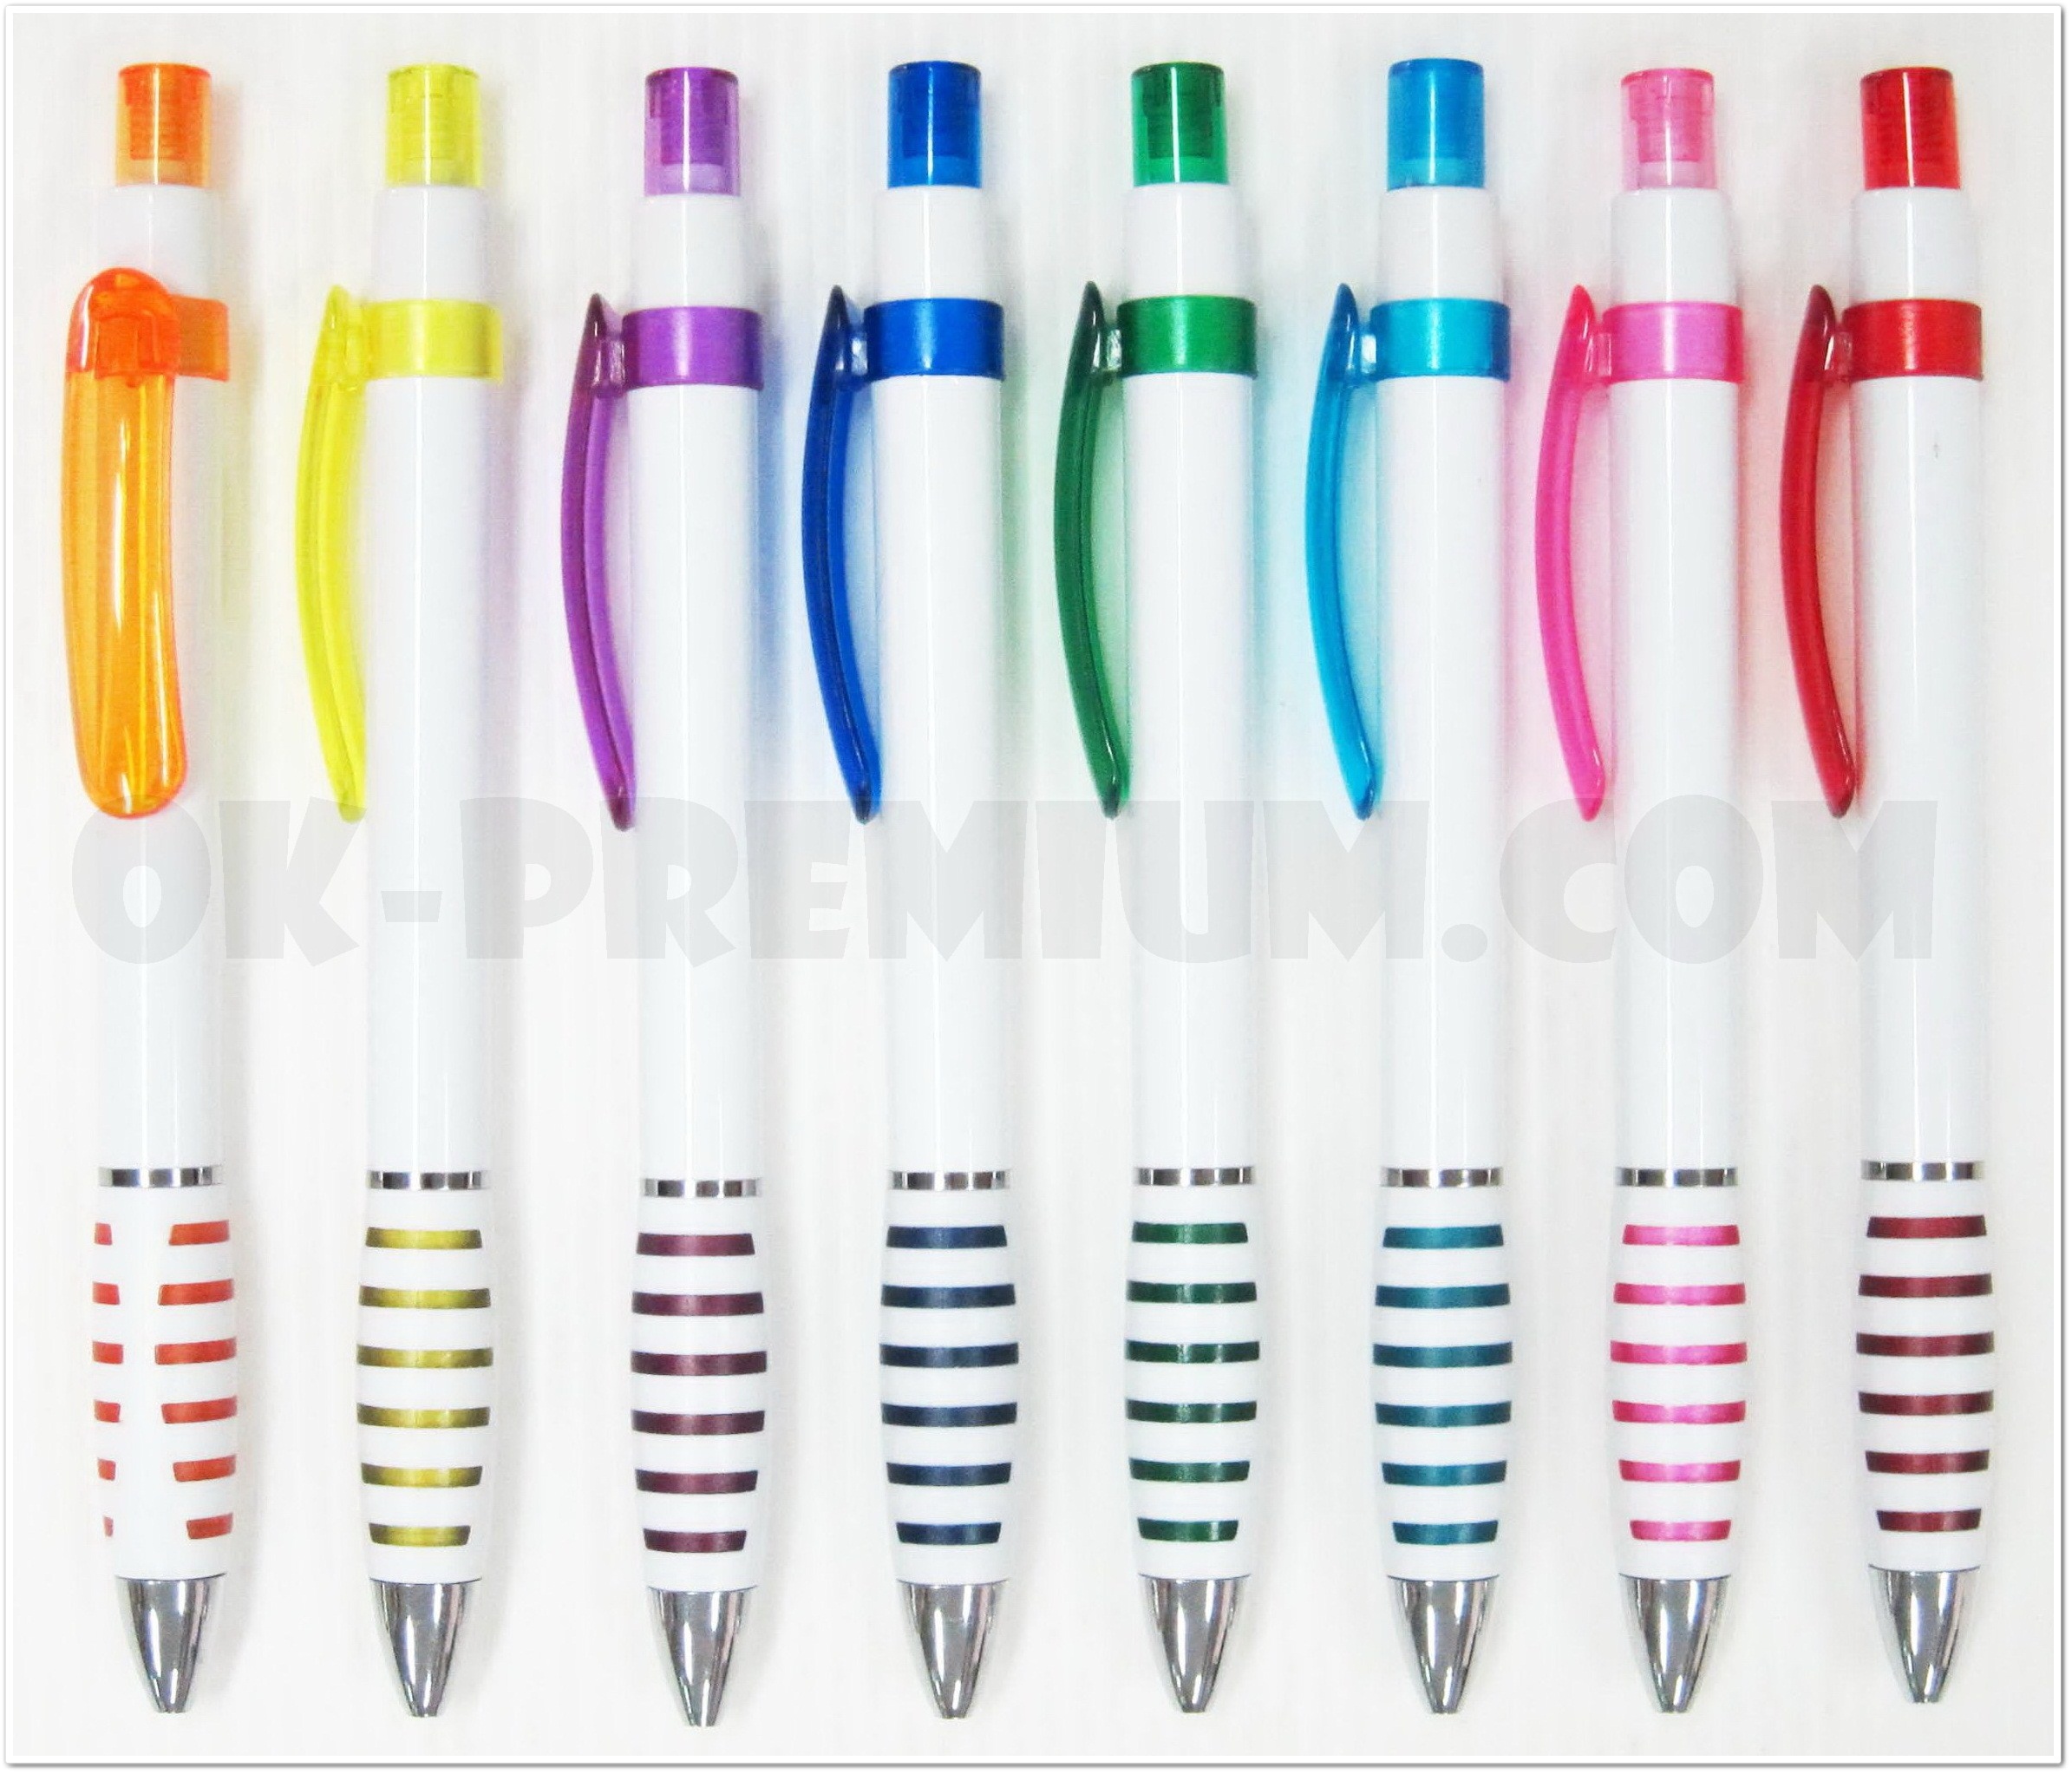 P010 ปากกาพลาสติก ปากกา ปากกาพรีเมี่ยม ปากกาพลาสติก พร้อมสกรีน สกรีนฟรี ของพรีเมี่ยม สินค้าพรีเมี่ยม ของนำเข้า สินค้านำเข้า ของแจก ของแถม ของชำร่วย มีให้เลือกหลายแบบค่ะ